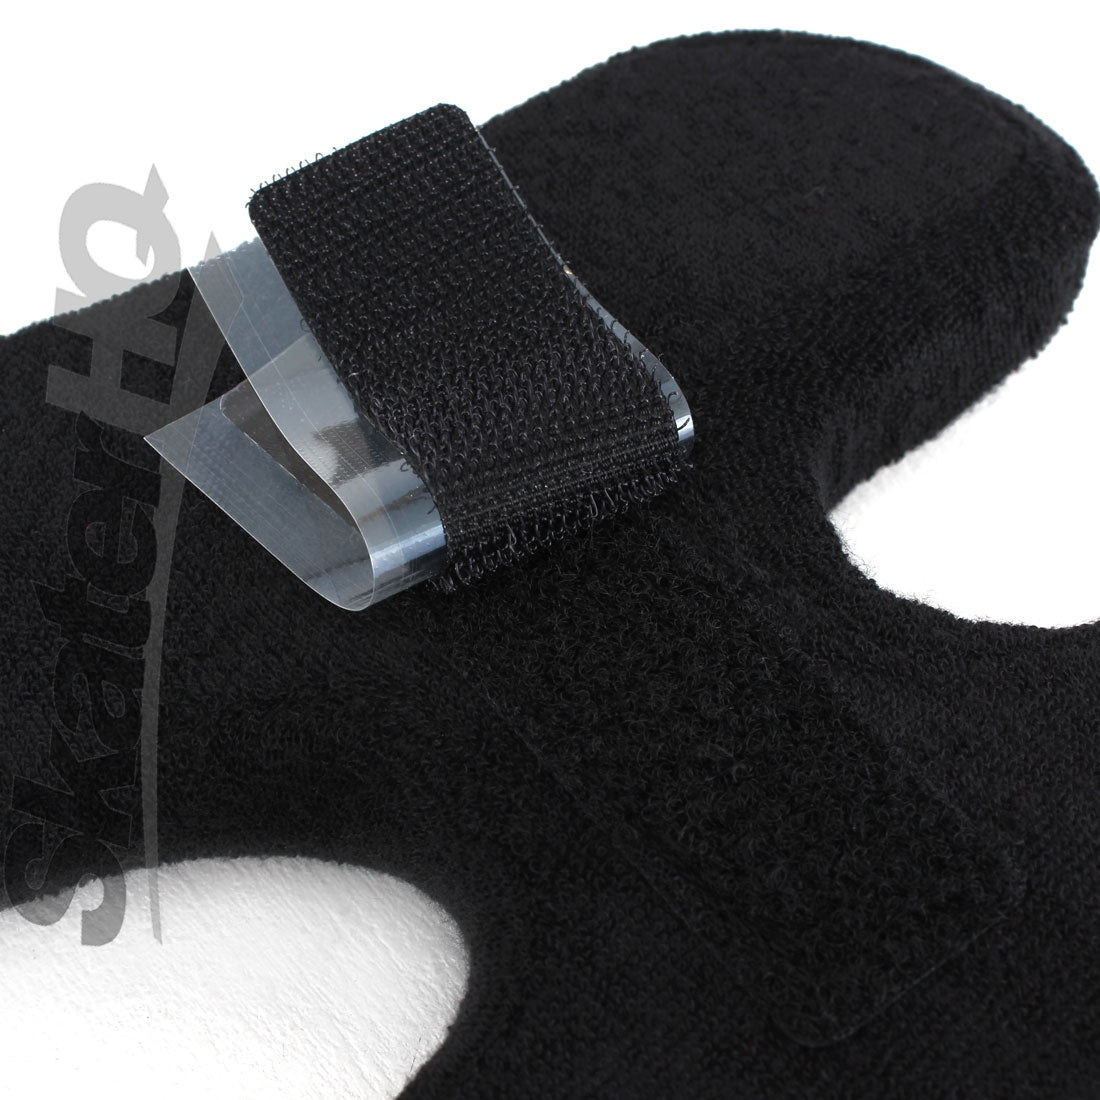 Triple 8 Sweatsaver Liner Black - Small Helmet liners